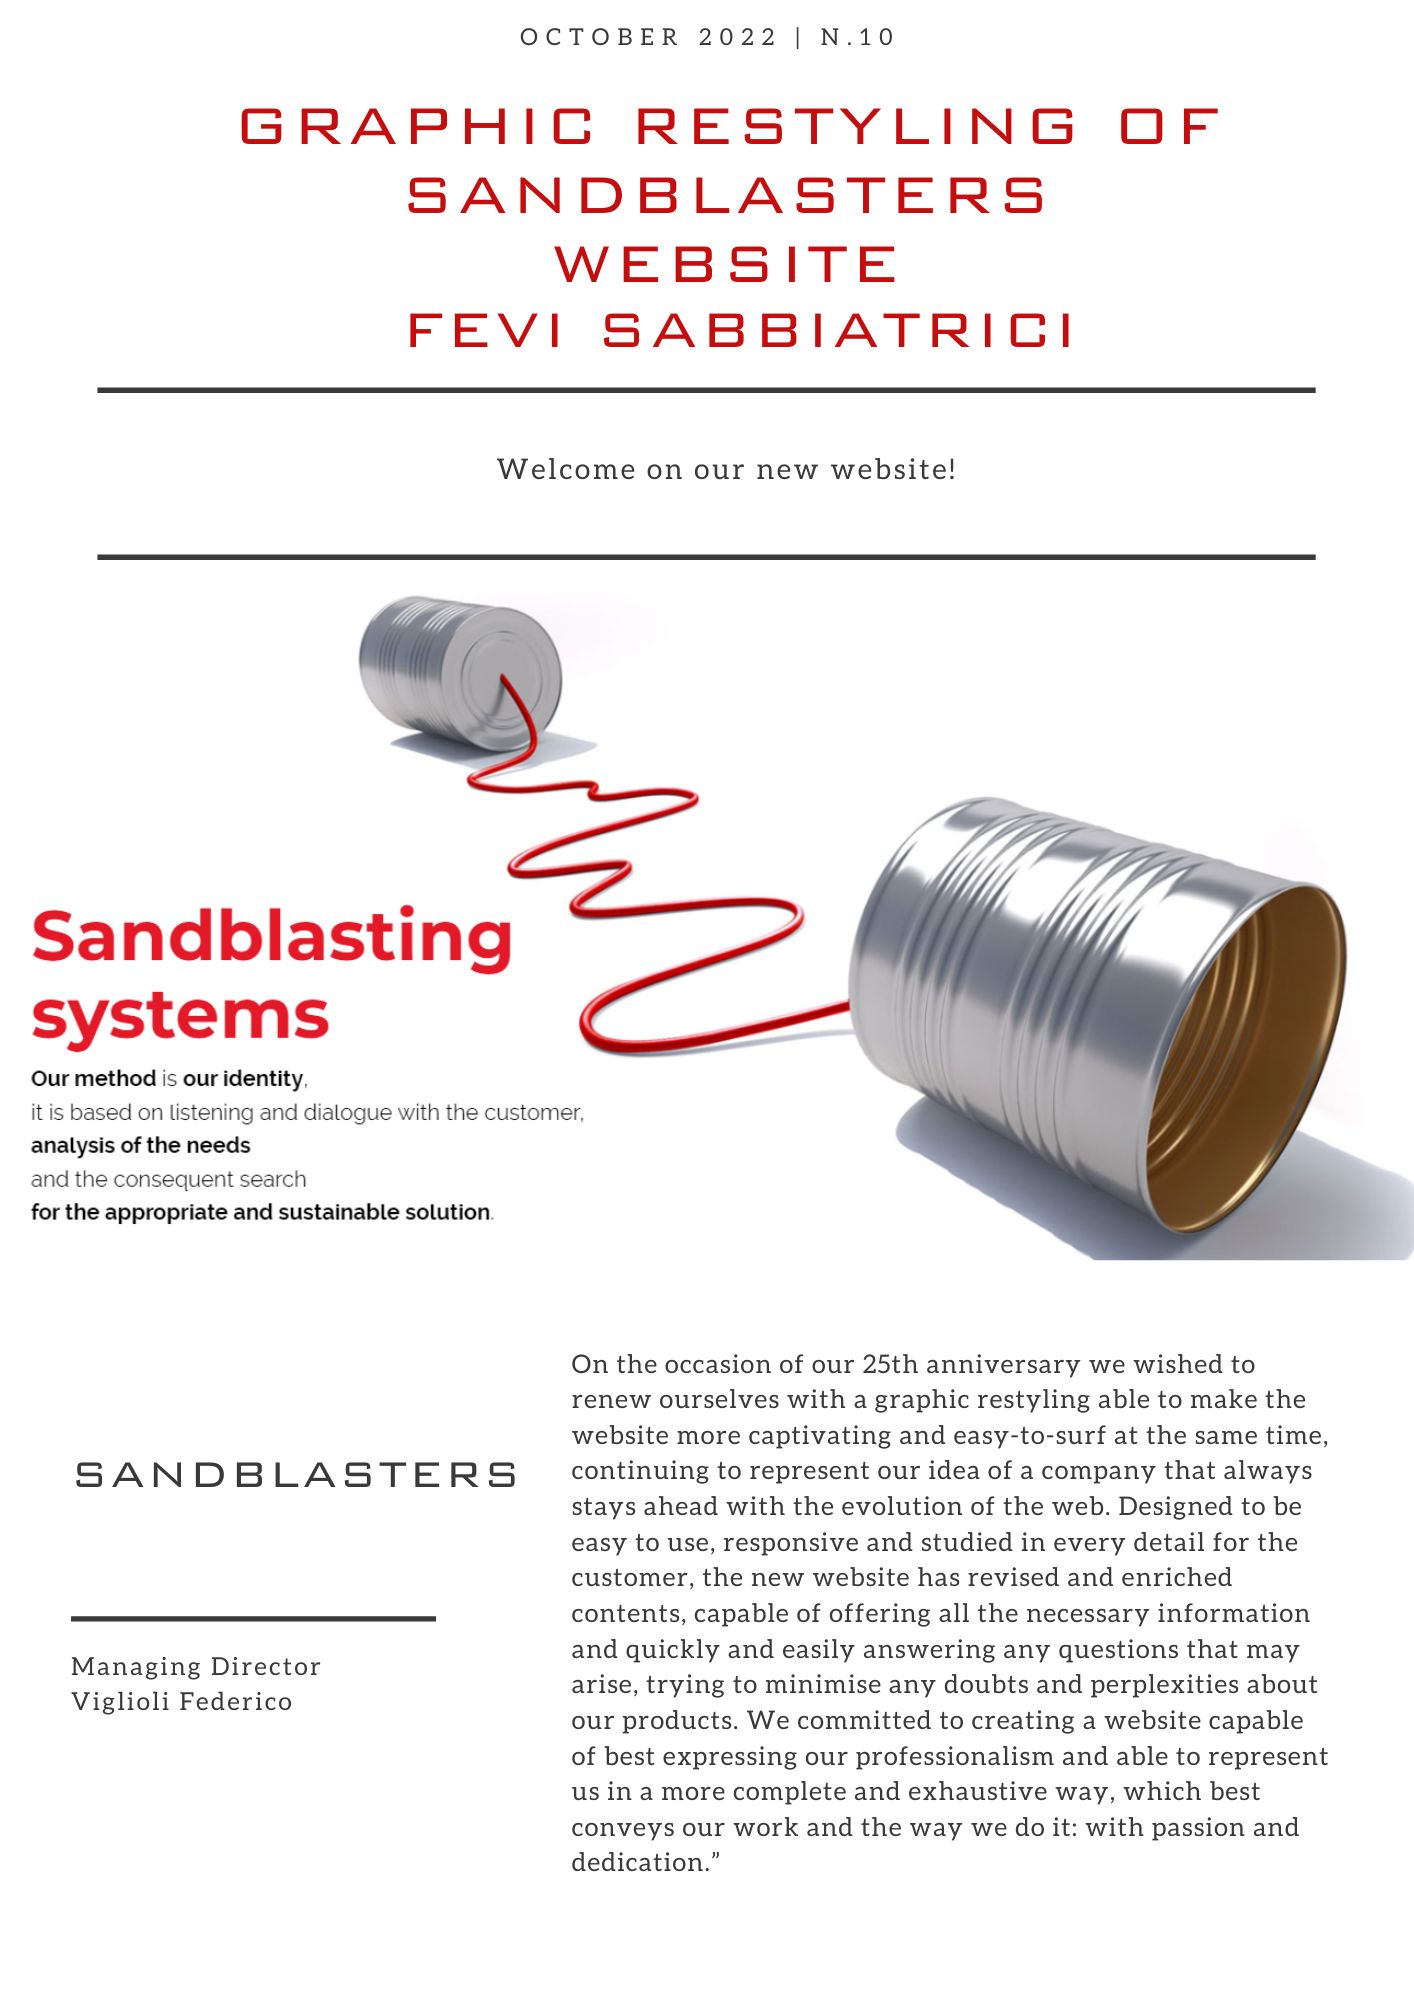 NEWS: Graphic restyling of sandblasters website 